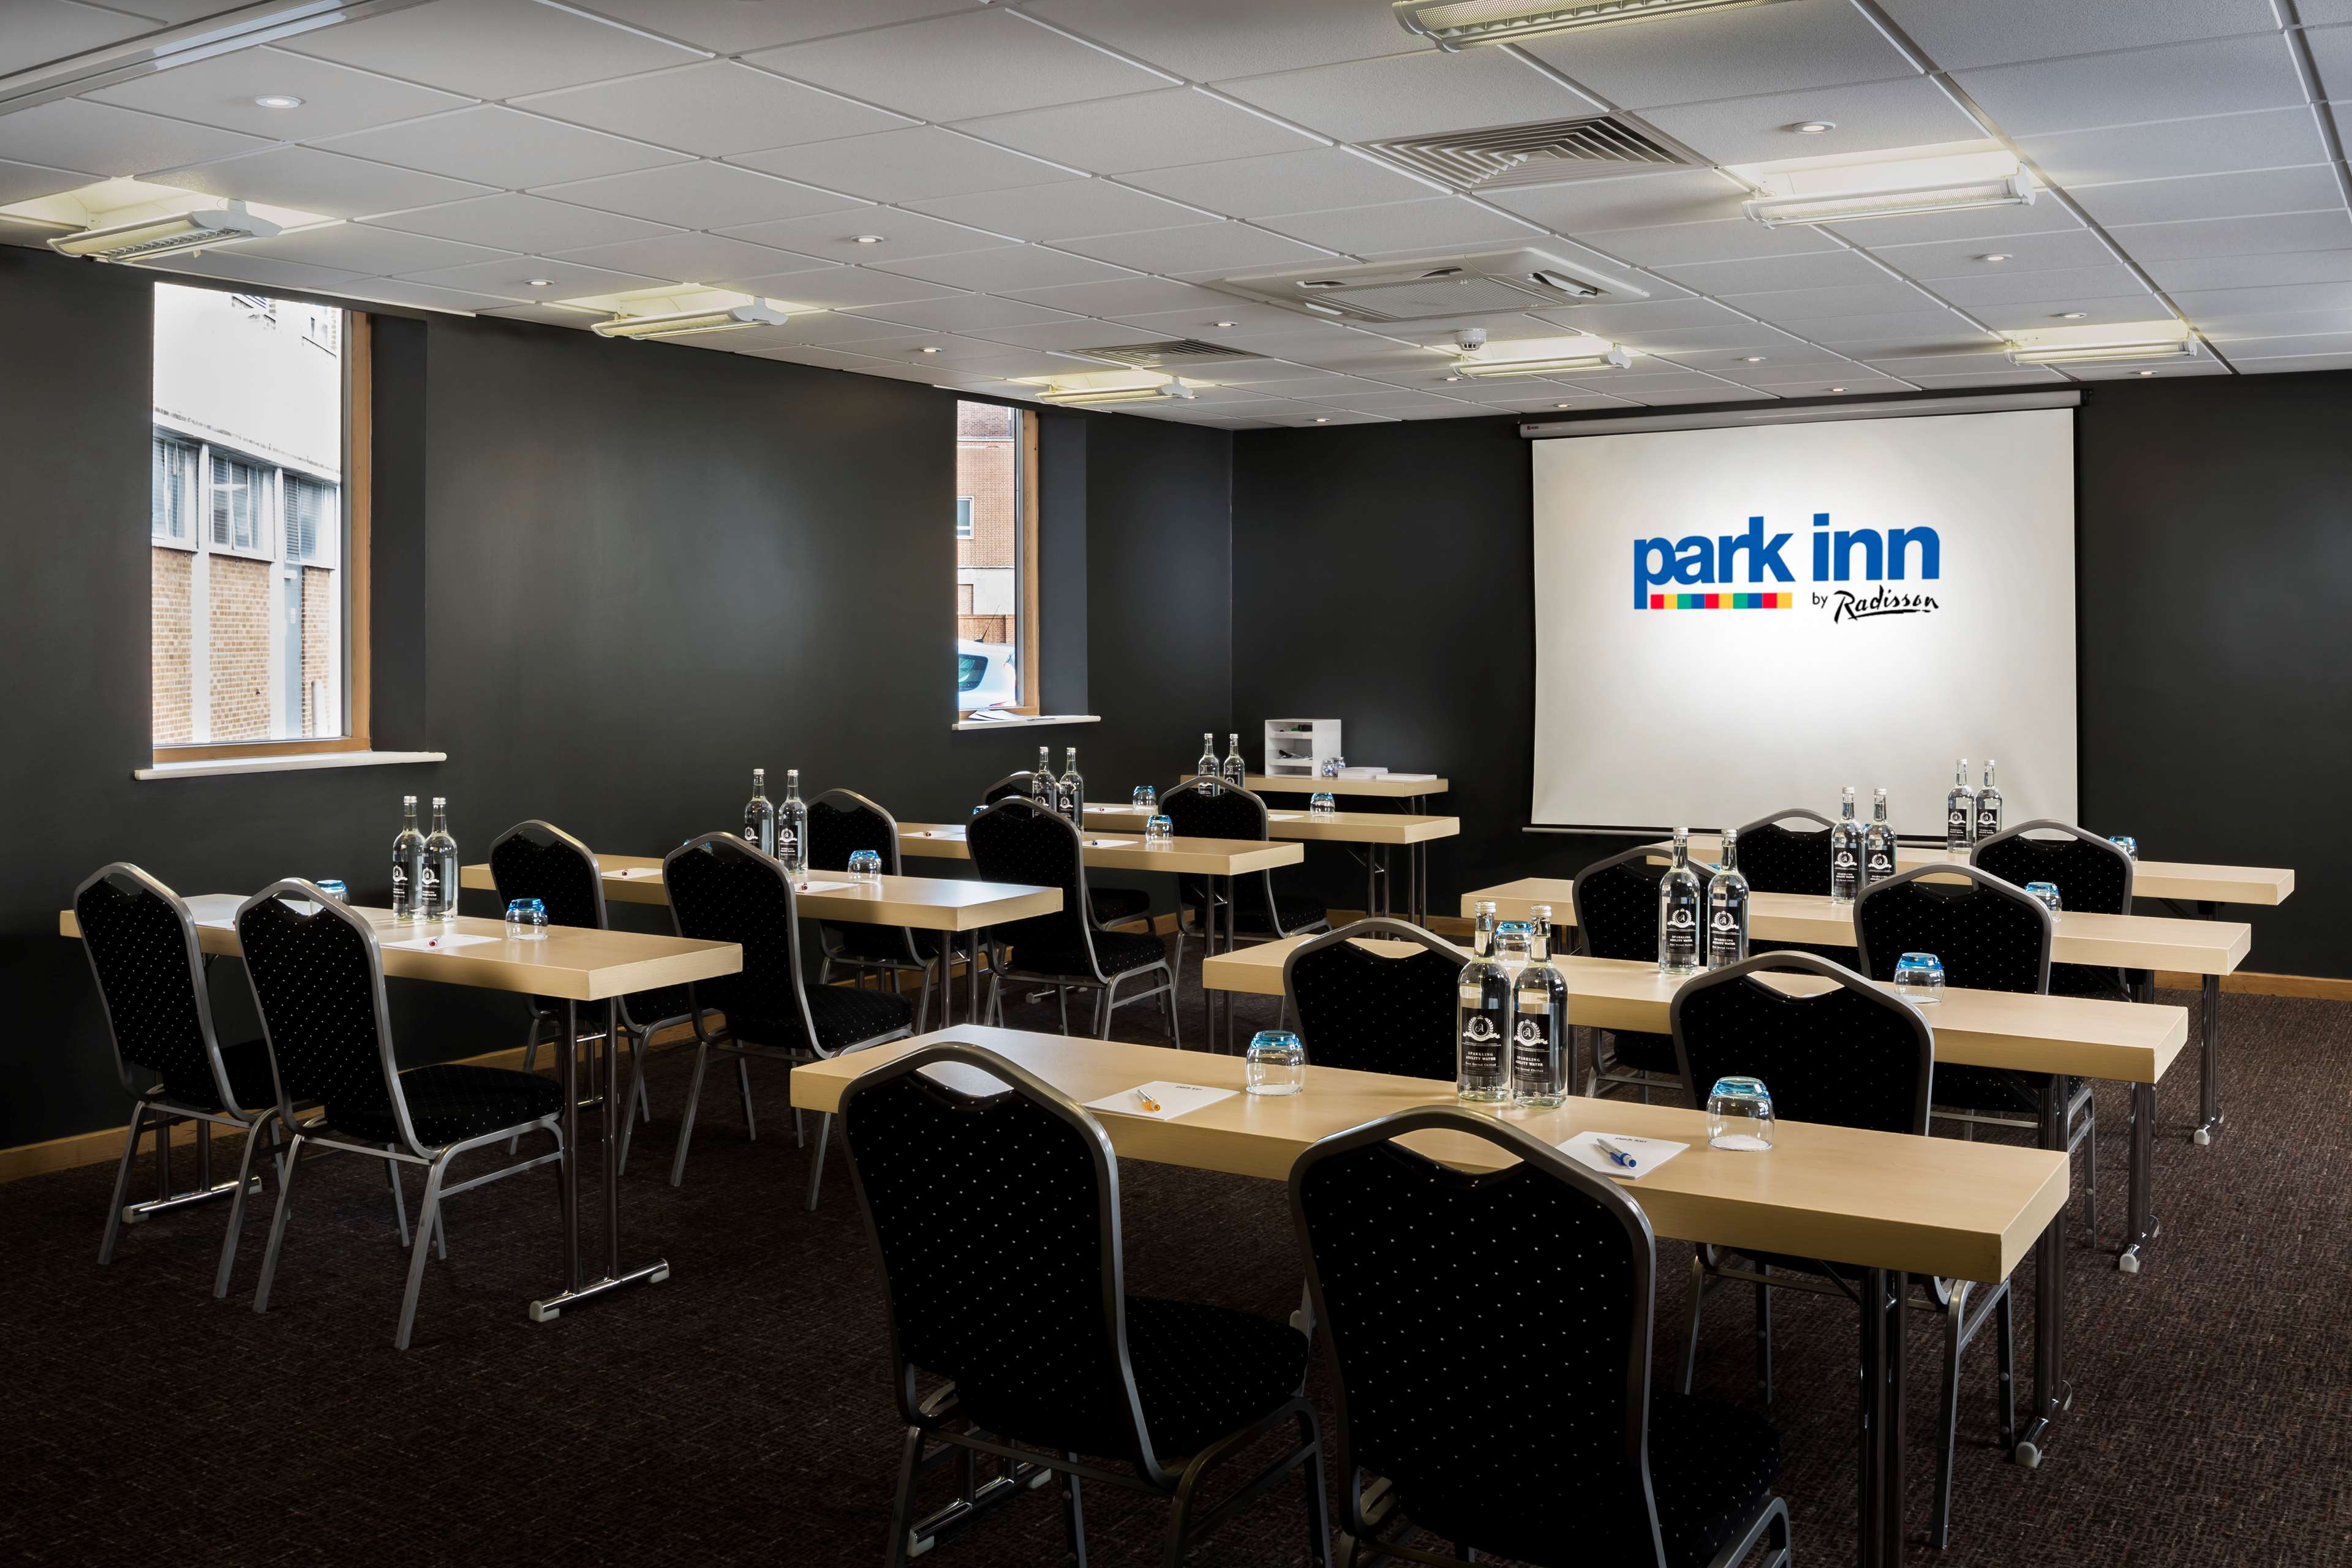 Meeting Room Classroom Style Park Inn by Radisson Peterborough Peterborough 01733 353750